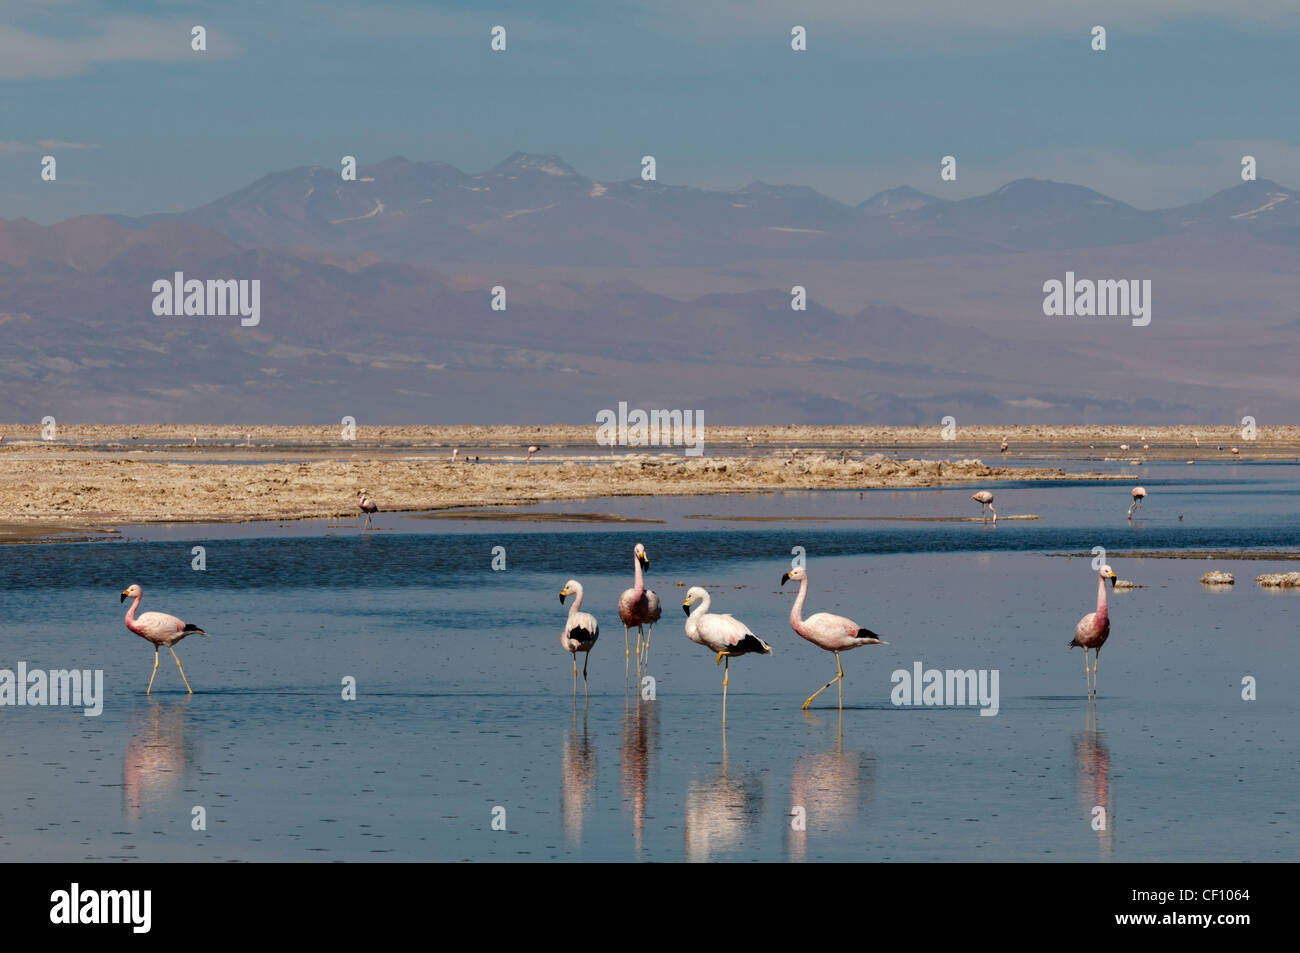 Flamant du Chili (Phoenicopterus chilensis),, Laguna Chaxa, Salar de Atacama, Désert d'Atacama, au Chili. Banque D'Images